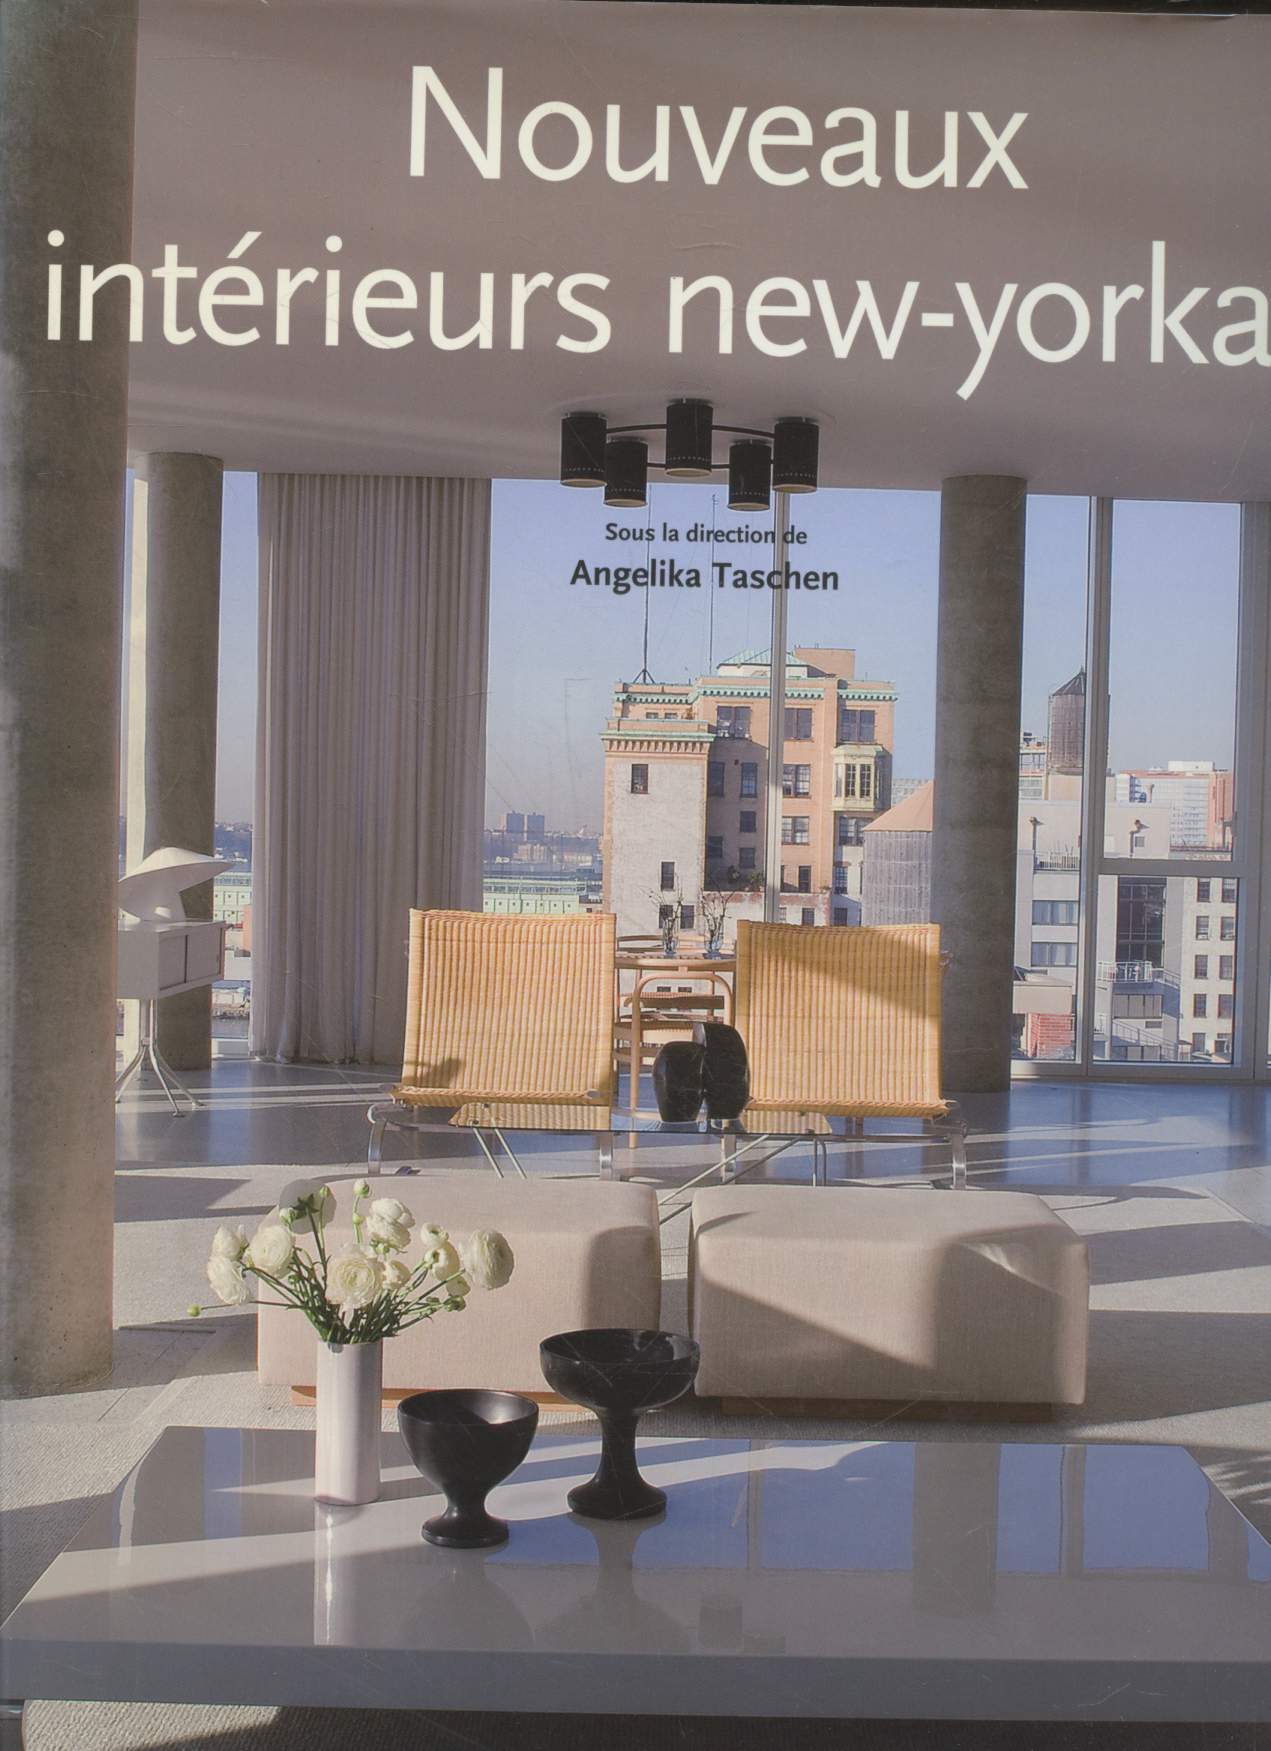 New New York Interiors - Nouveaux intrieurs new-yorkais